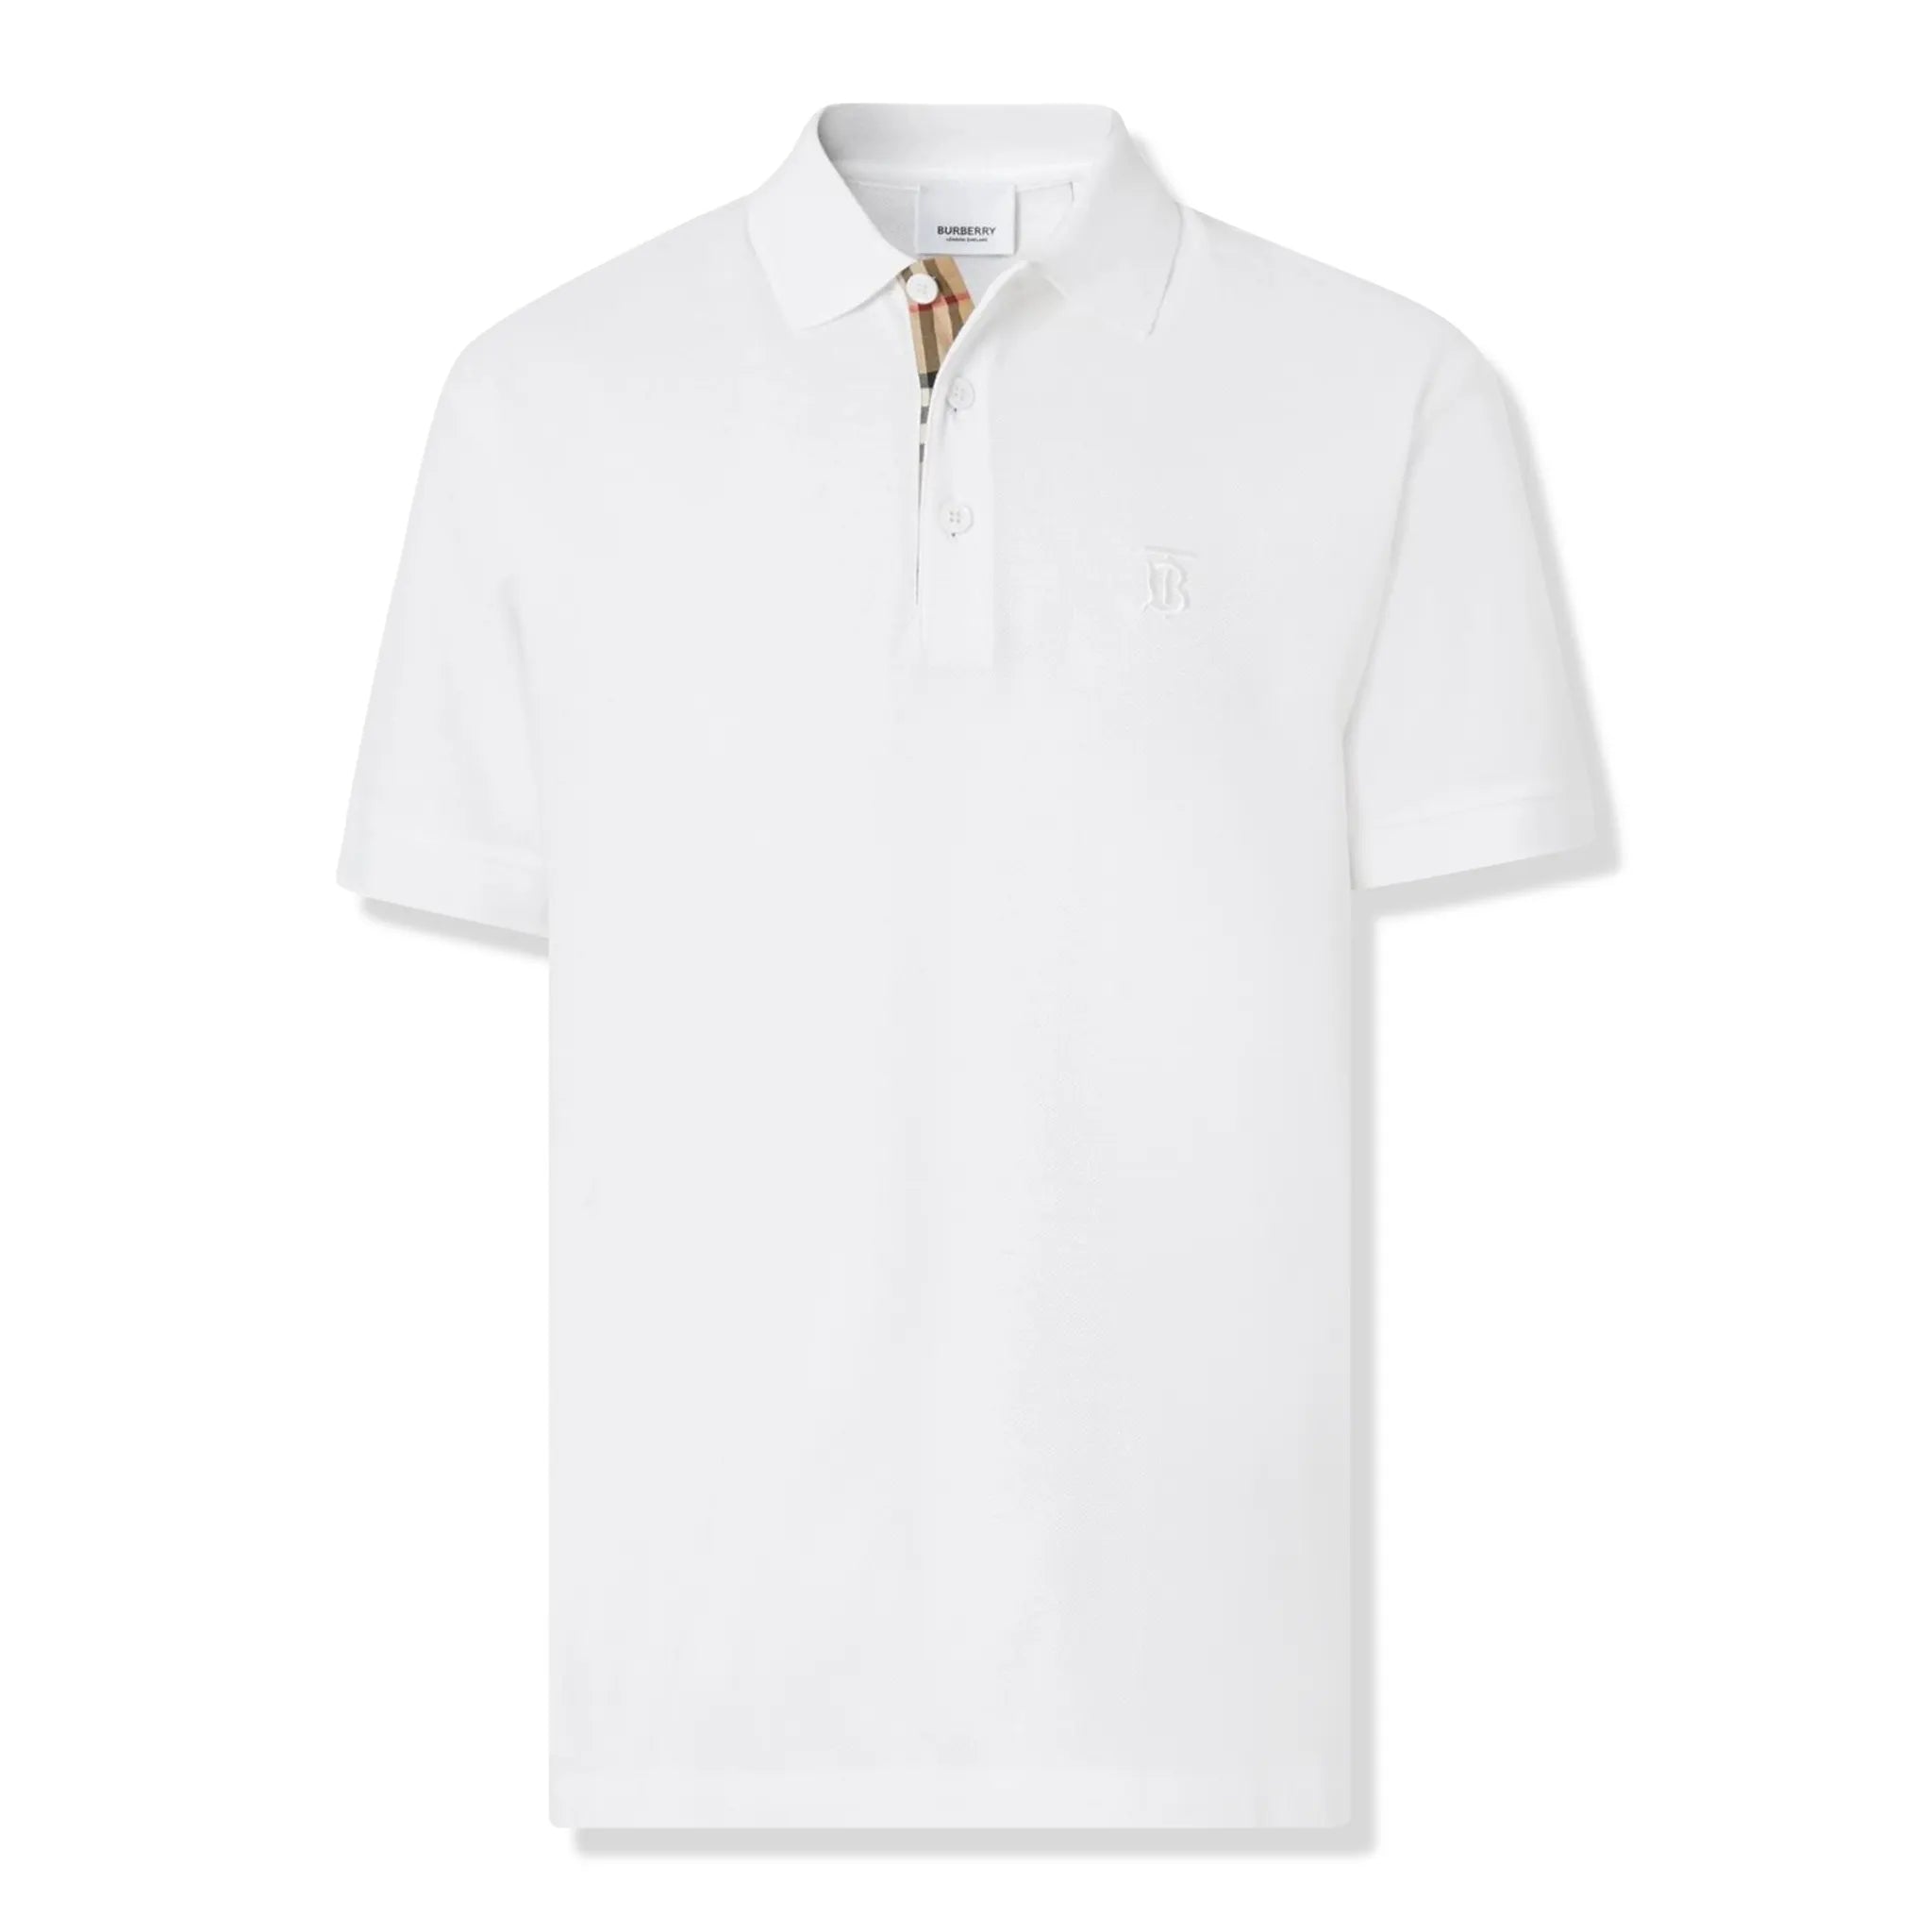 Front view of Burberry Eddie Logo Piqué Cotton White Polo Shirt lange P80552291